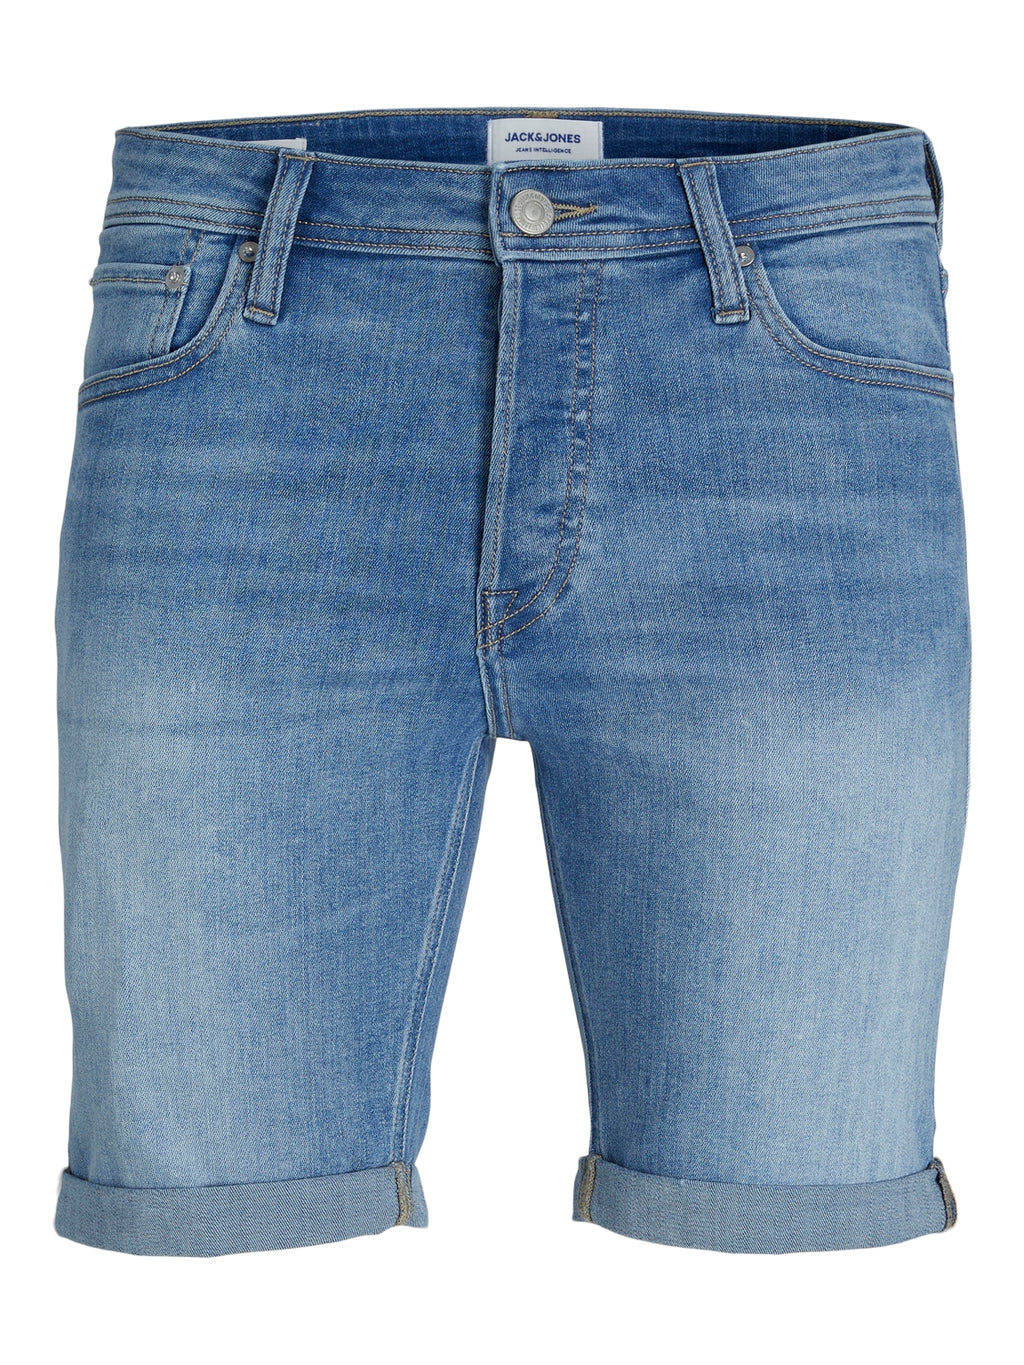 Jack & Jones AM 600 Denim Shorts  Light Blue - Raw Menswear